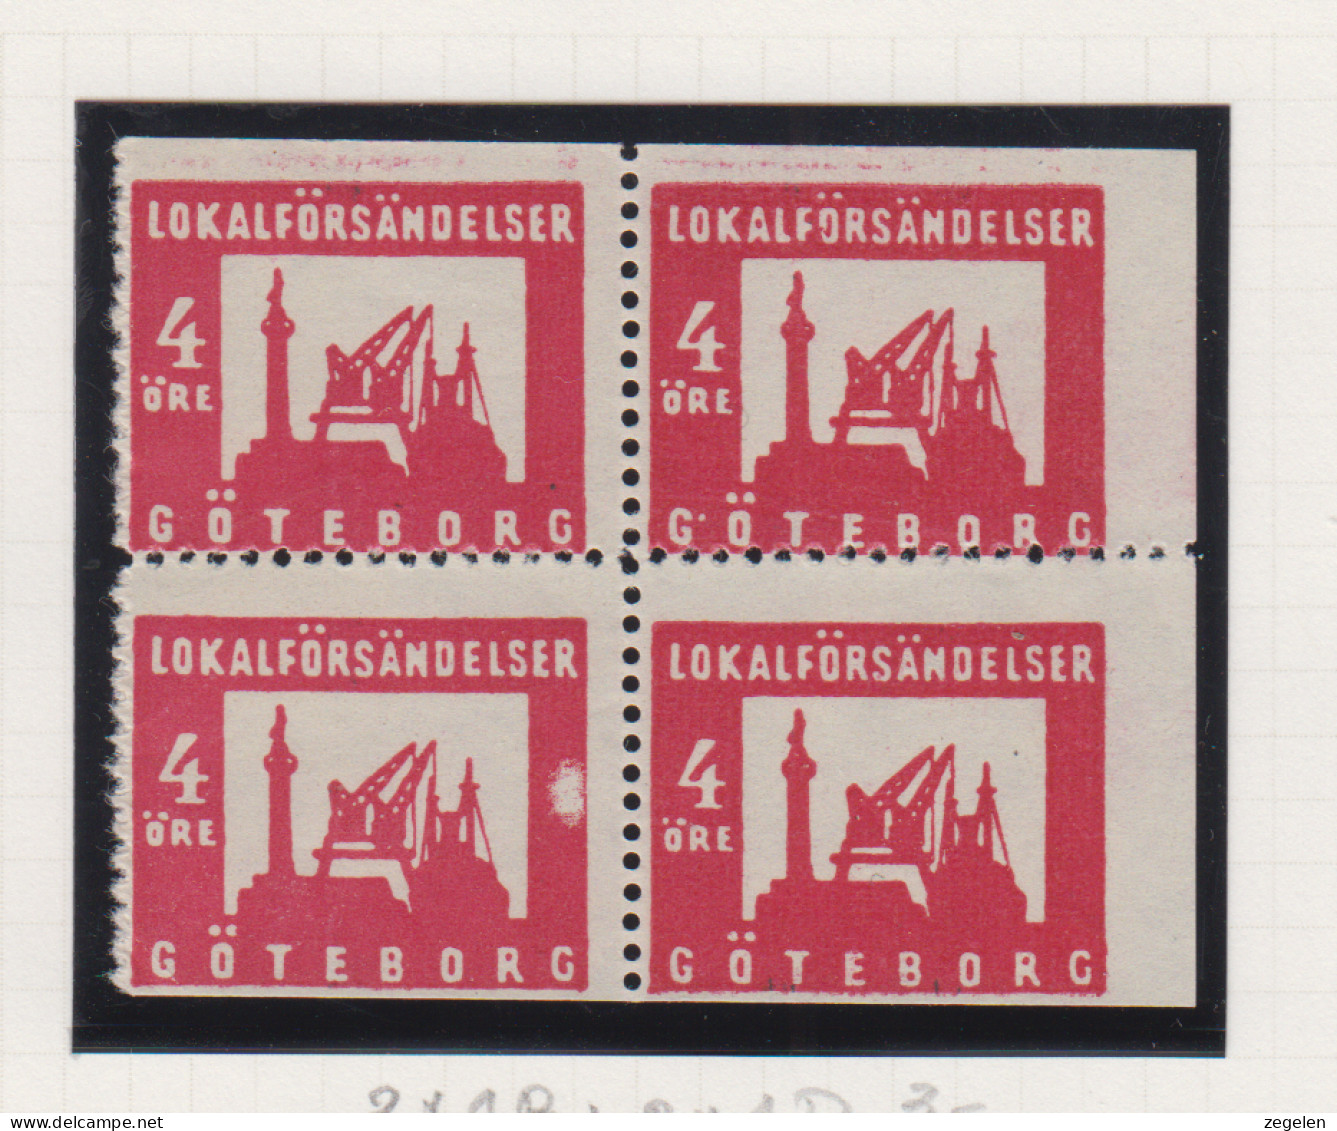 Zweden Lokale Zegel Cat. Facit Sverige 2000 Private Lokaalpost Göteborgs Lokalförsandelser 1 Rood 4 Verschillende Tandin - Local Post Stamps